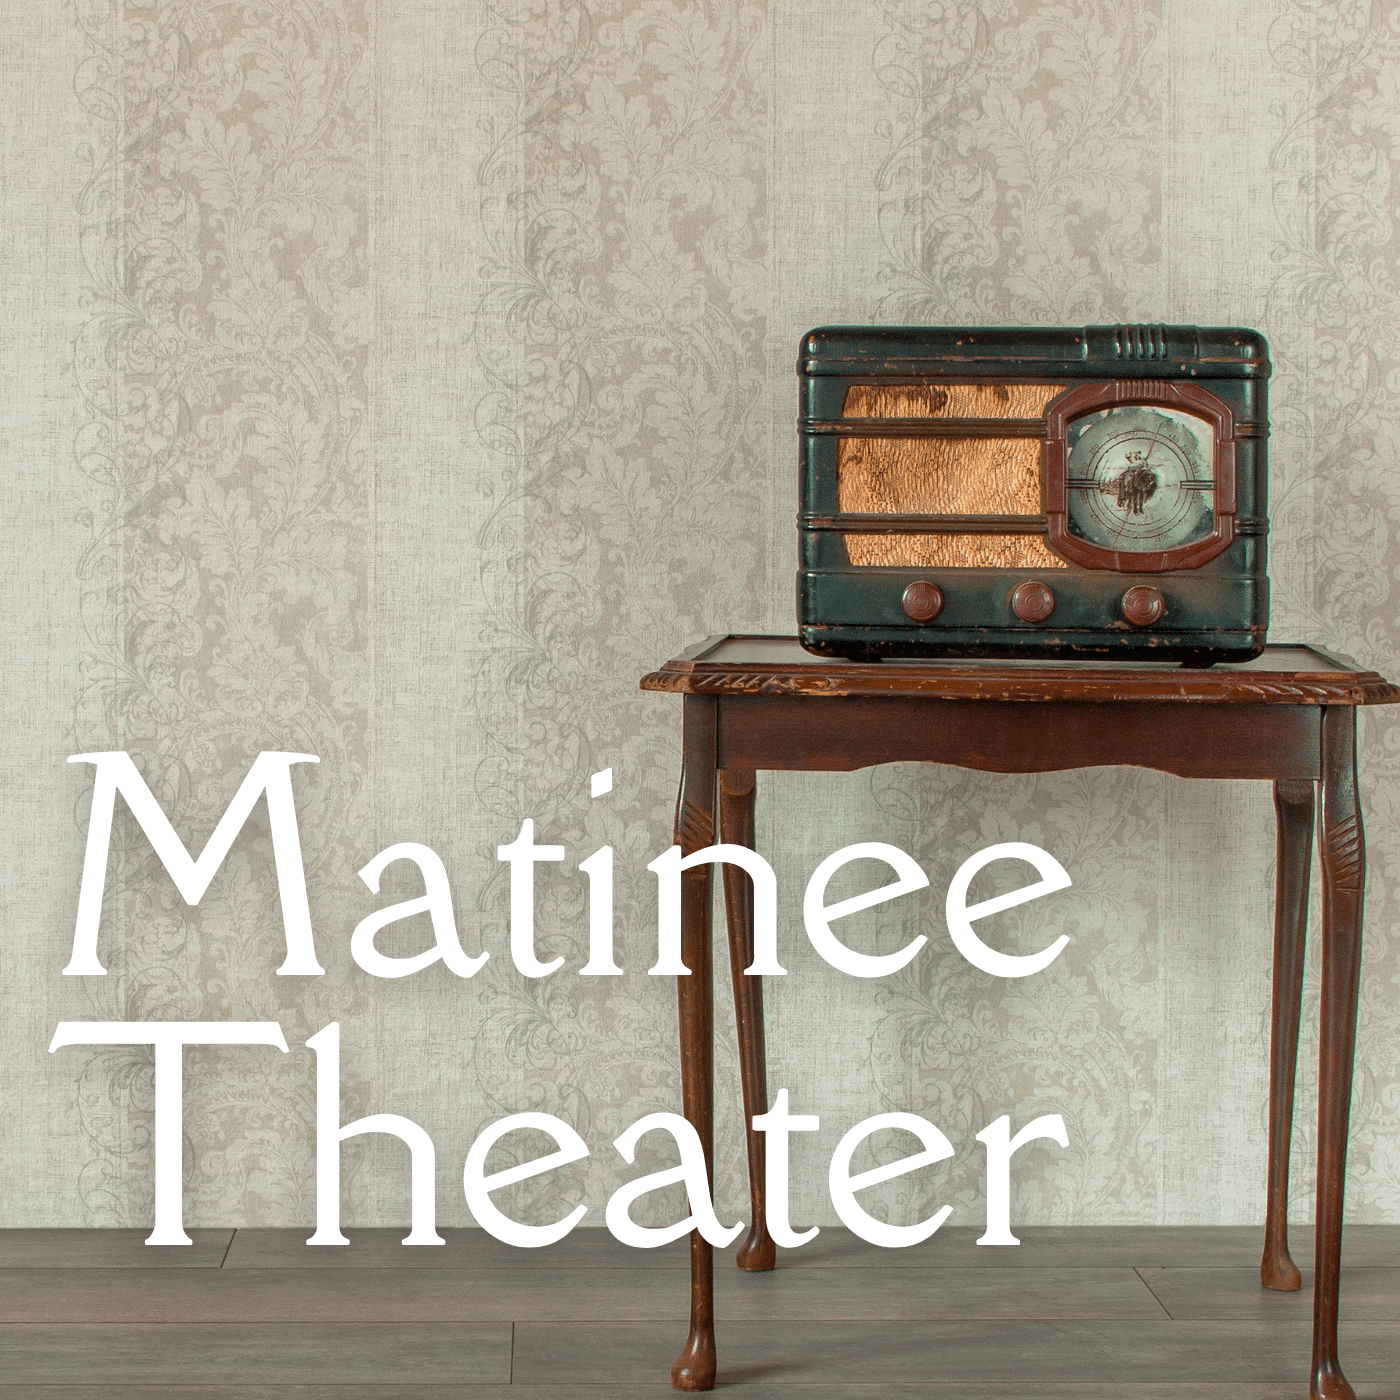 Matinee Theater